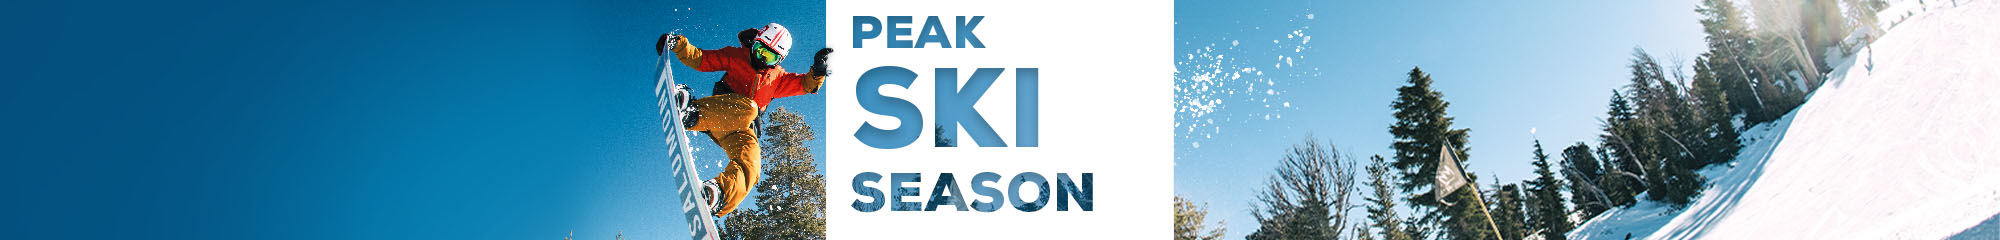 Peak Ski Season